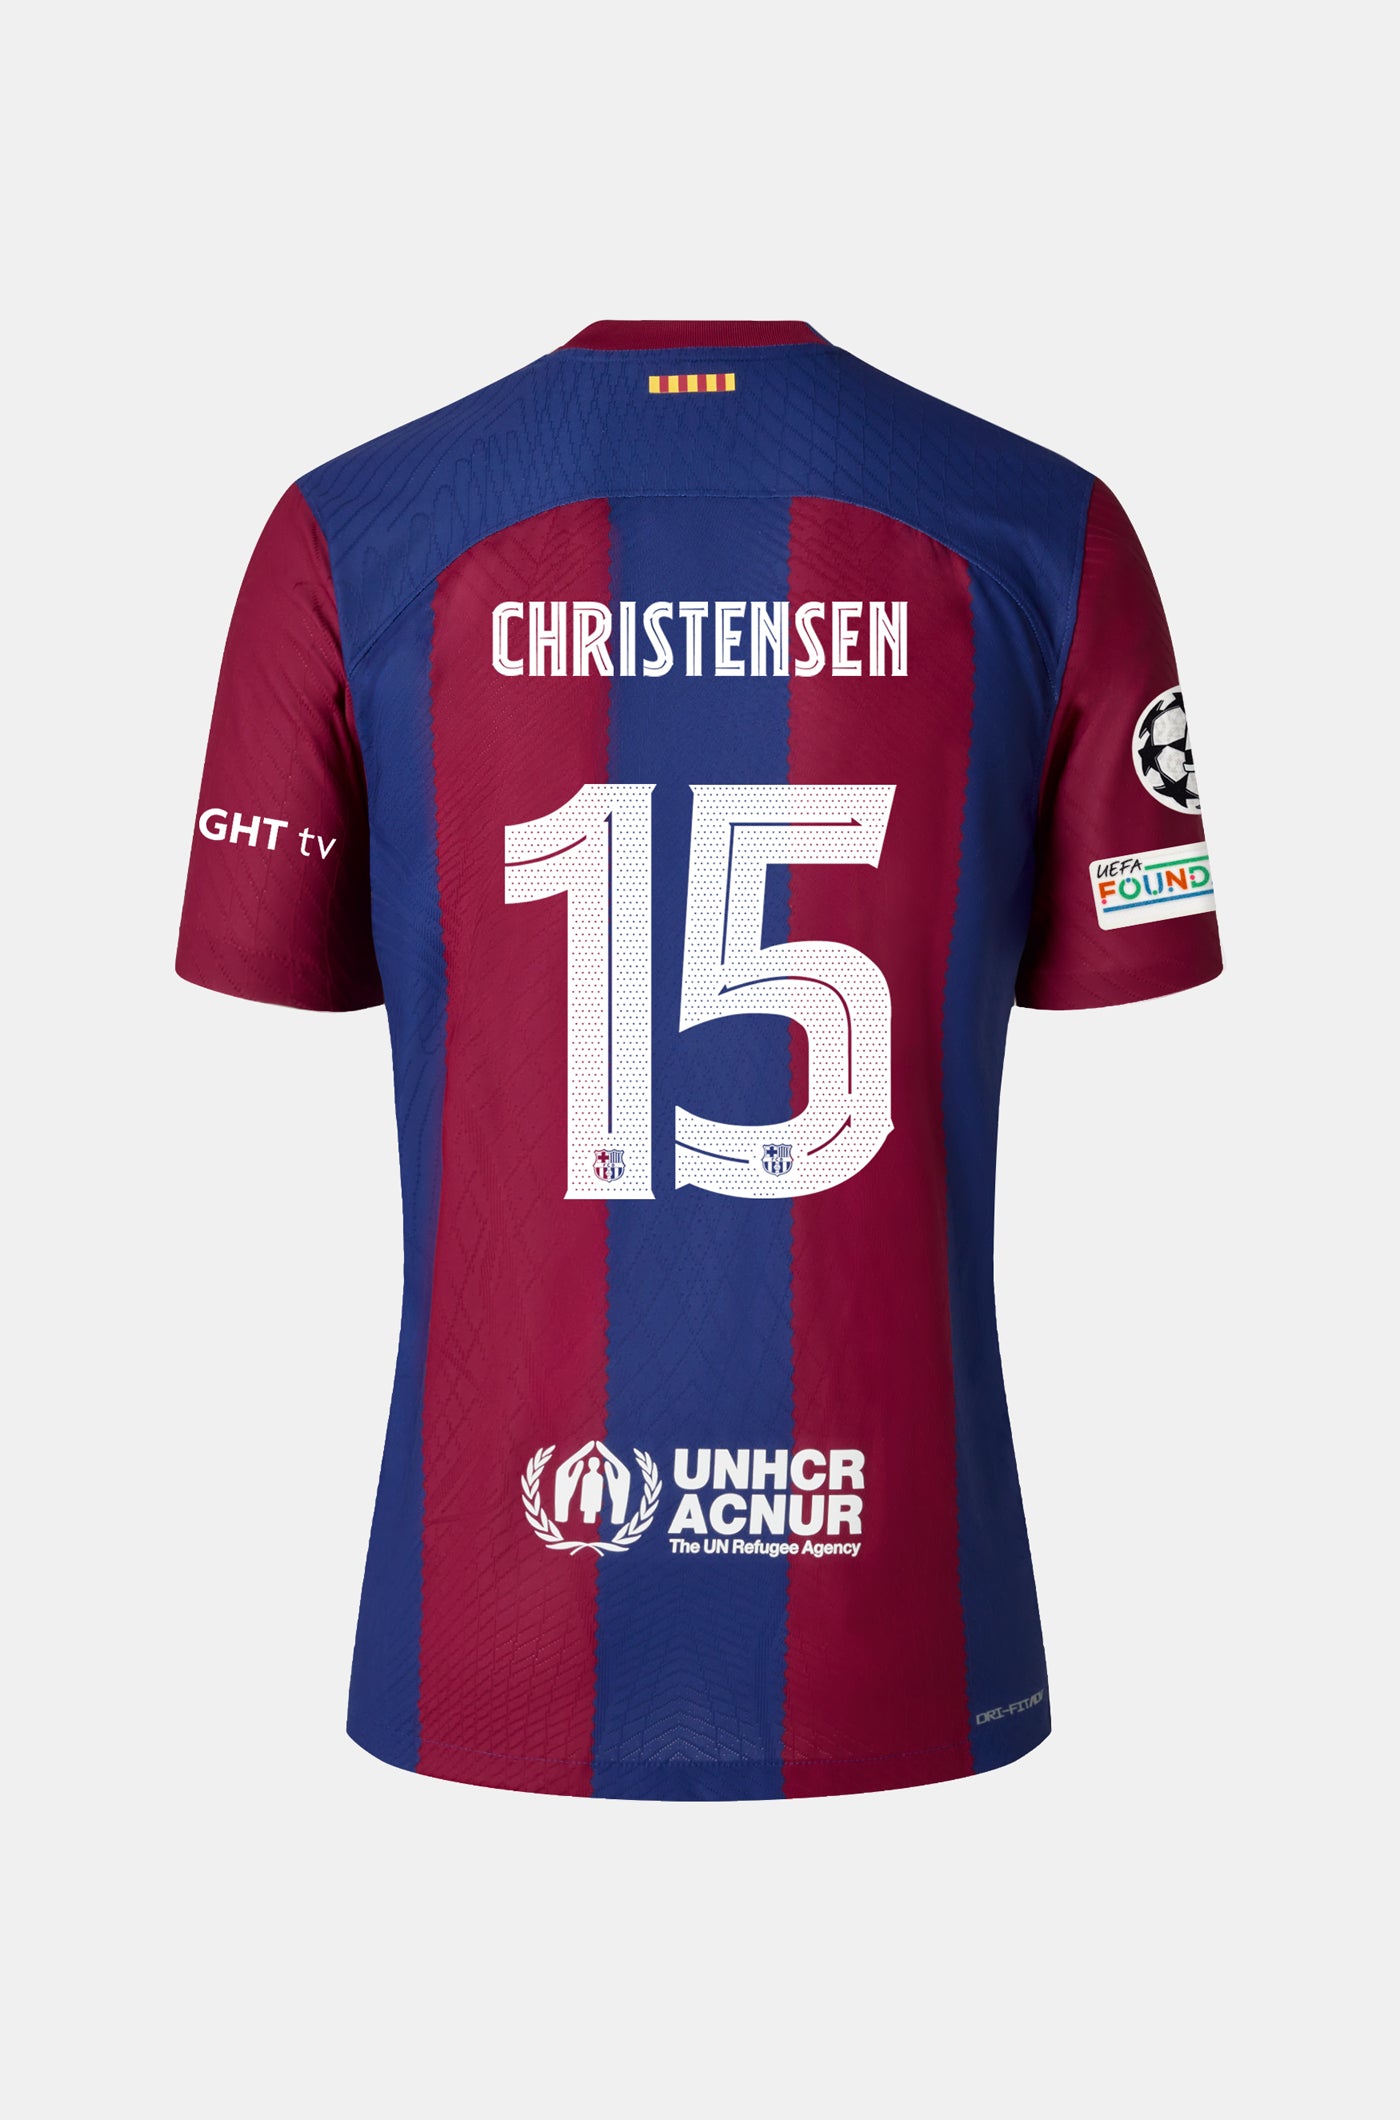 UCL FC Barcelona home shirt 23/24 Player's Edition  - CHRISTENSEN